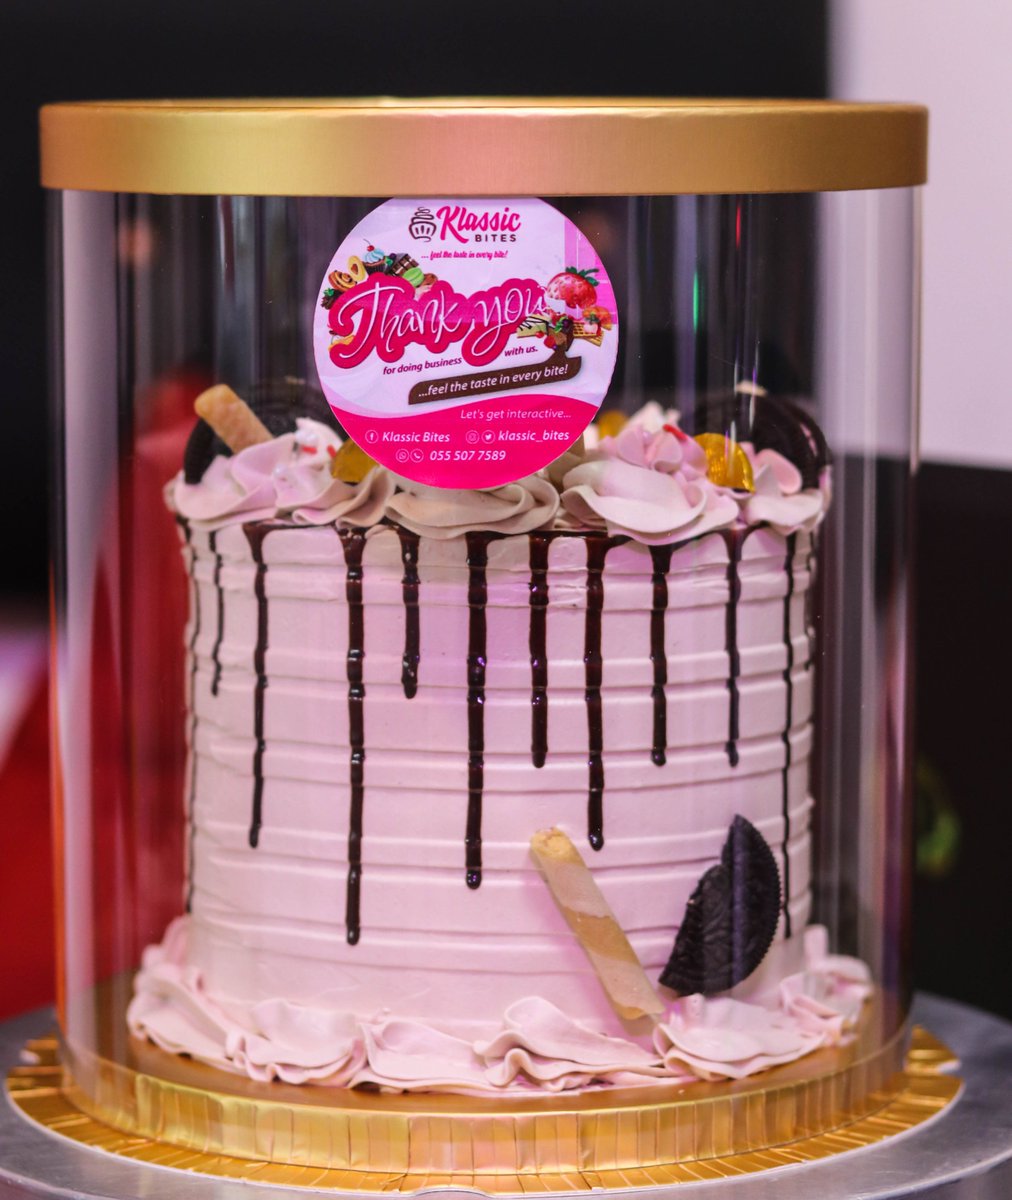 Yayyy it's a Friday Choco Crush.😘 #tgif
For all your #yummy treats Kindly contact us on 0555077589 .
Klassic Bites …feel the taste in every bite!🥰
#birthday #newpost #cake #pastrychef #cakedecorating #tbt #cakes #ghanacakes #roundcakes #hocakes #cakesinho #bakersinho